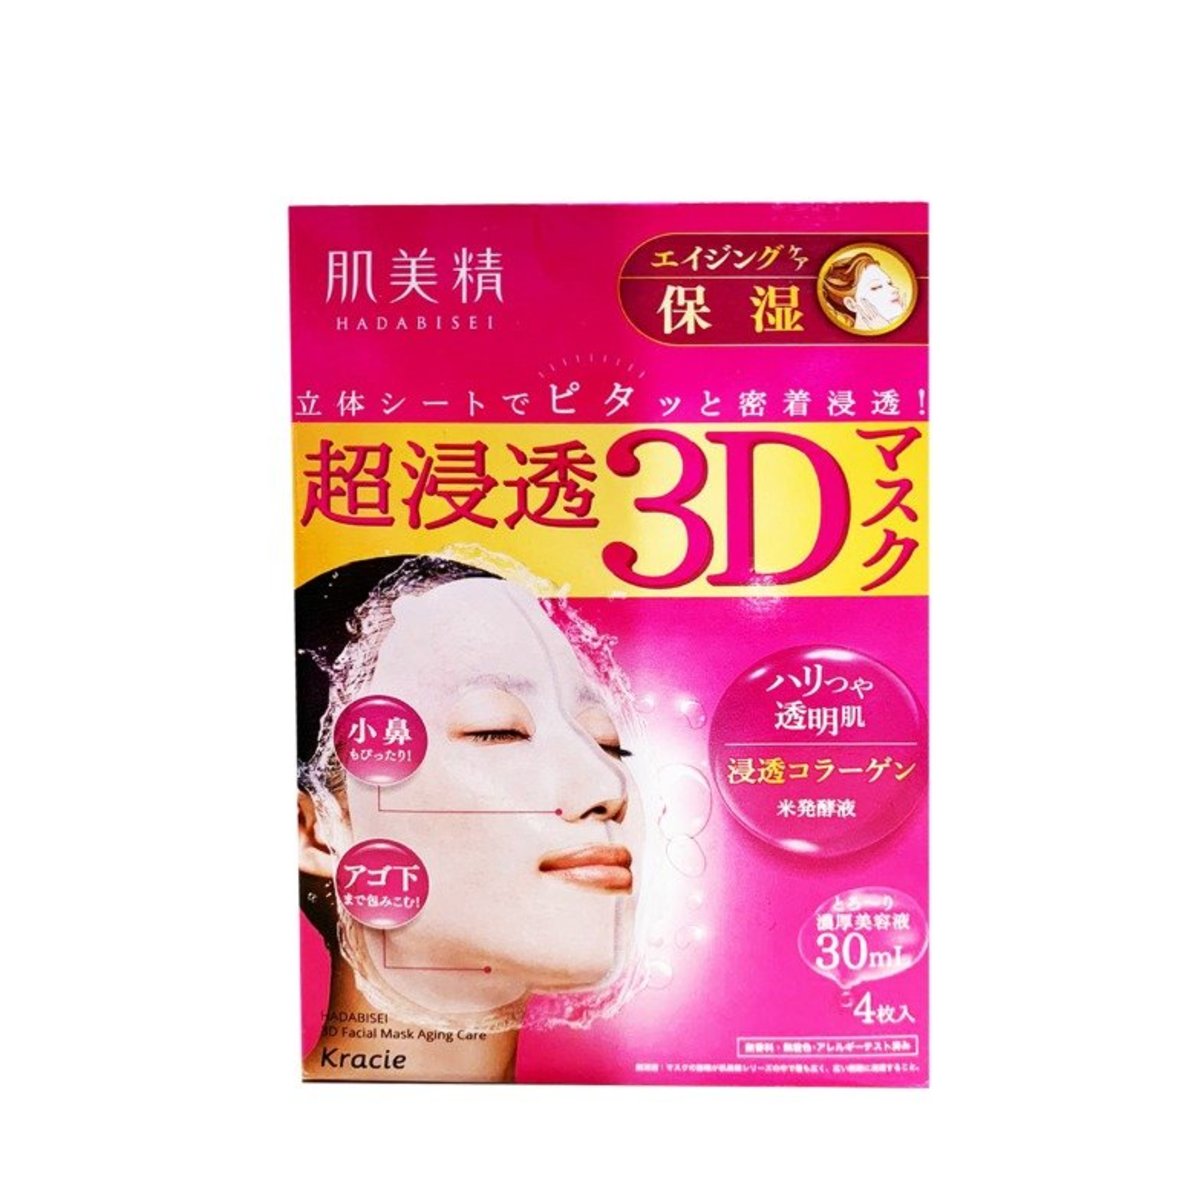 (Red)Hadabisei 3D Face Mask (Aging-care Moisturizing) 4pcs/box